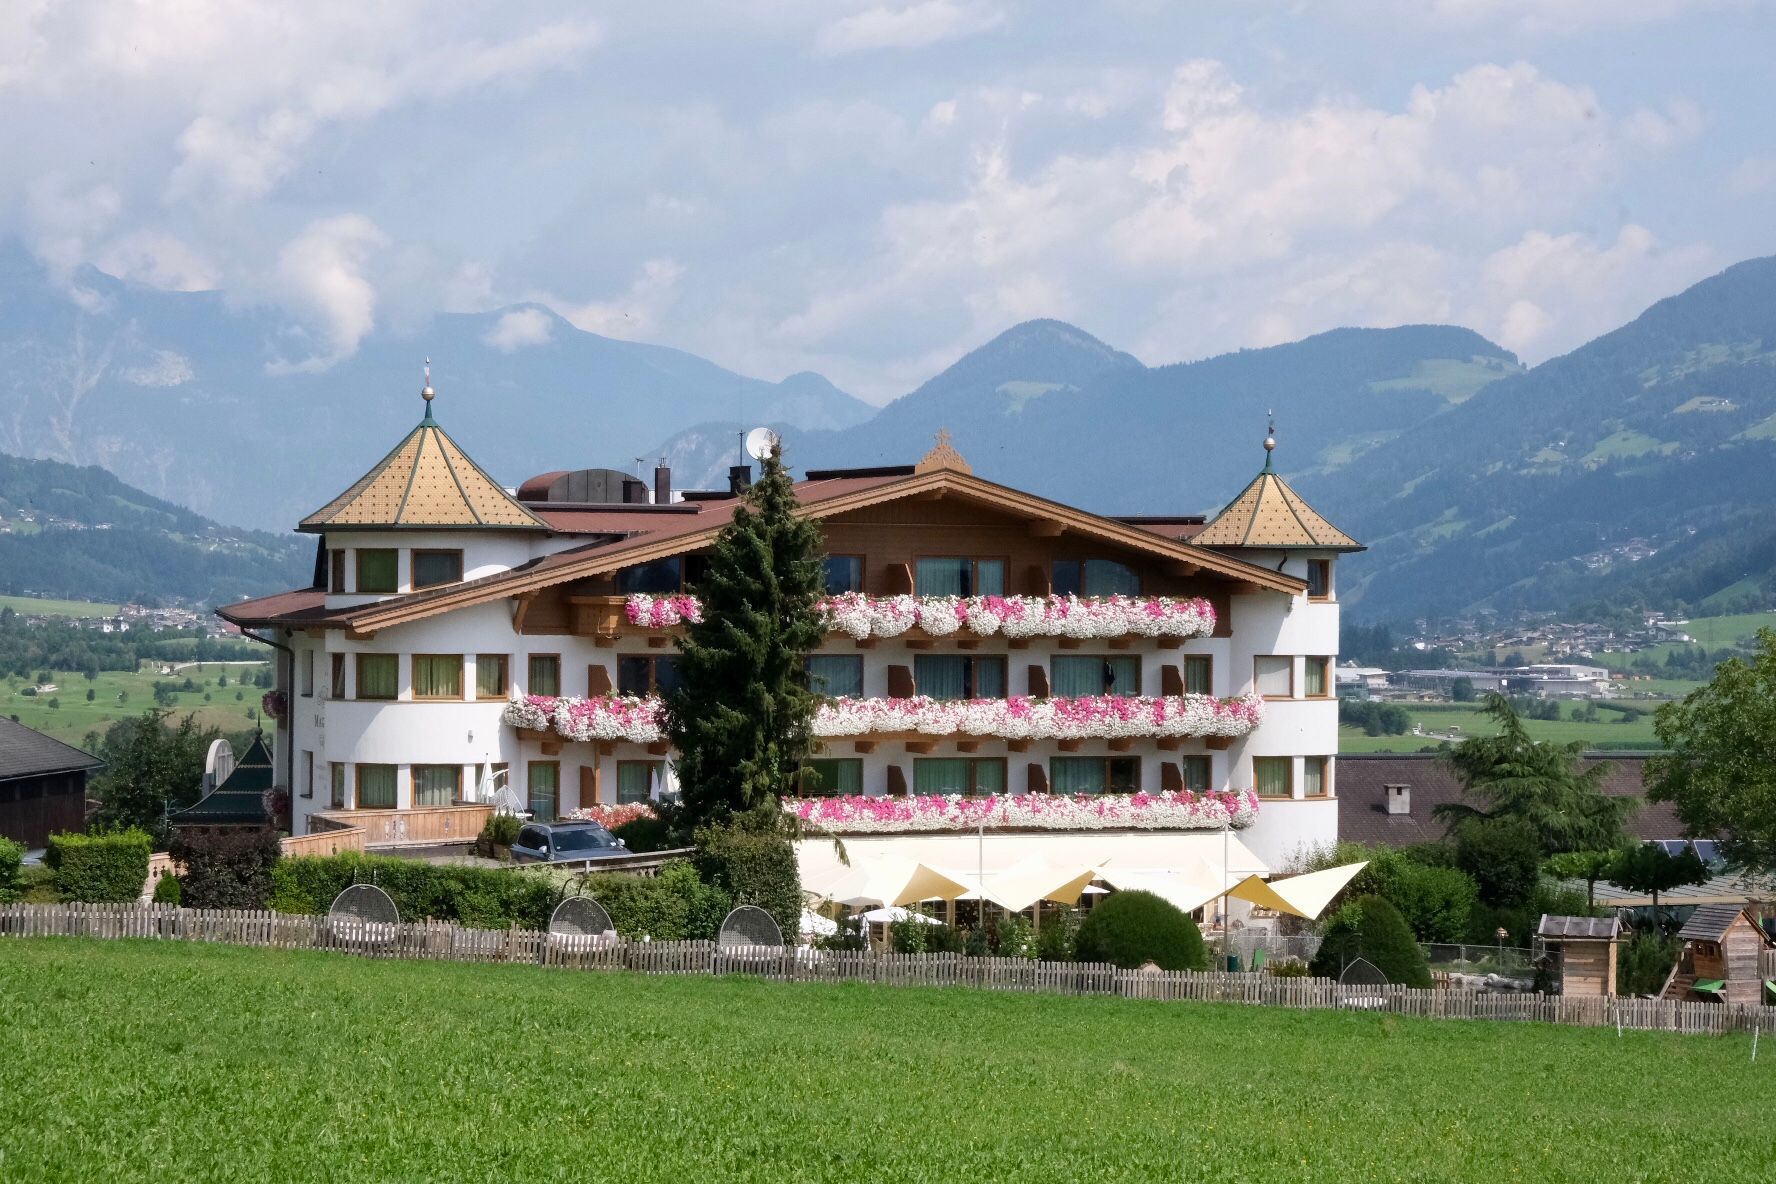 Mari Pop Hotel / Jižní Tyrolsko